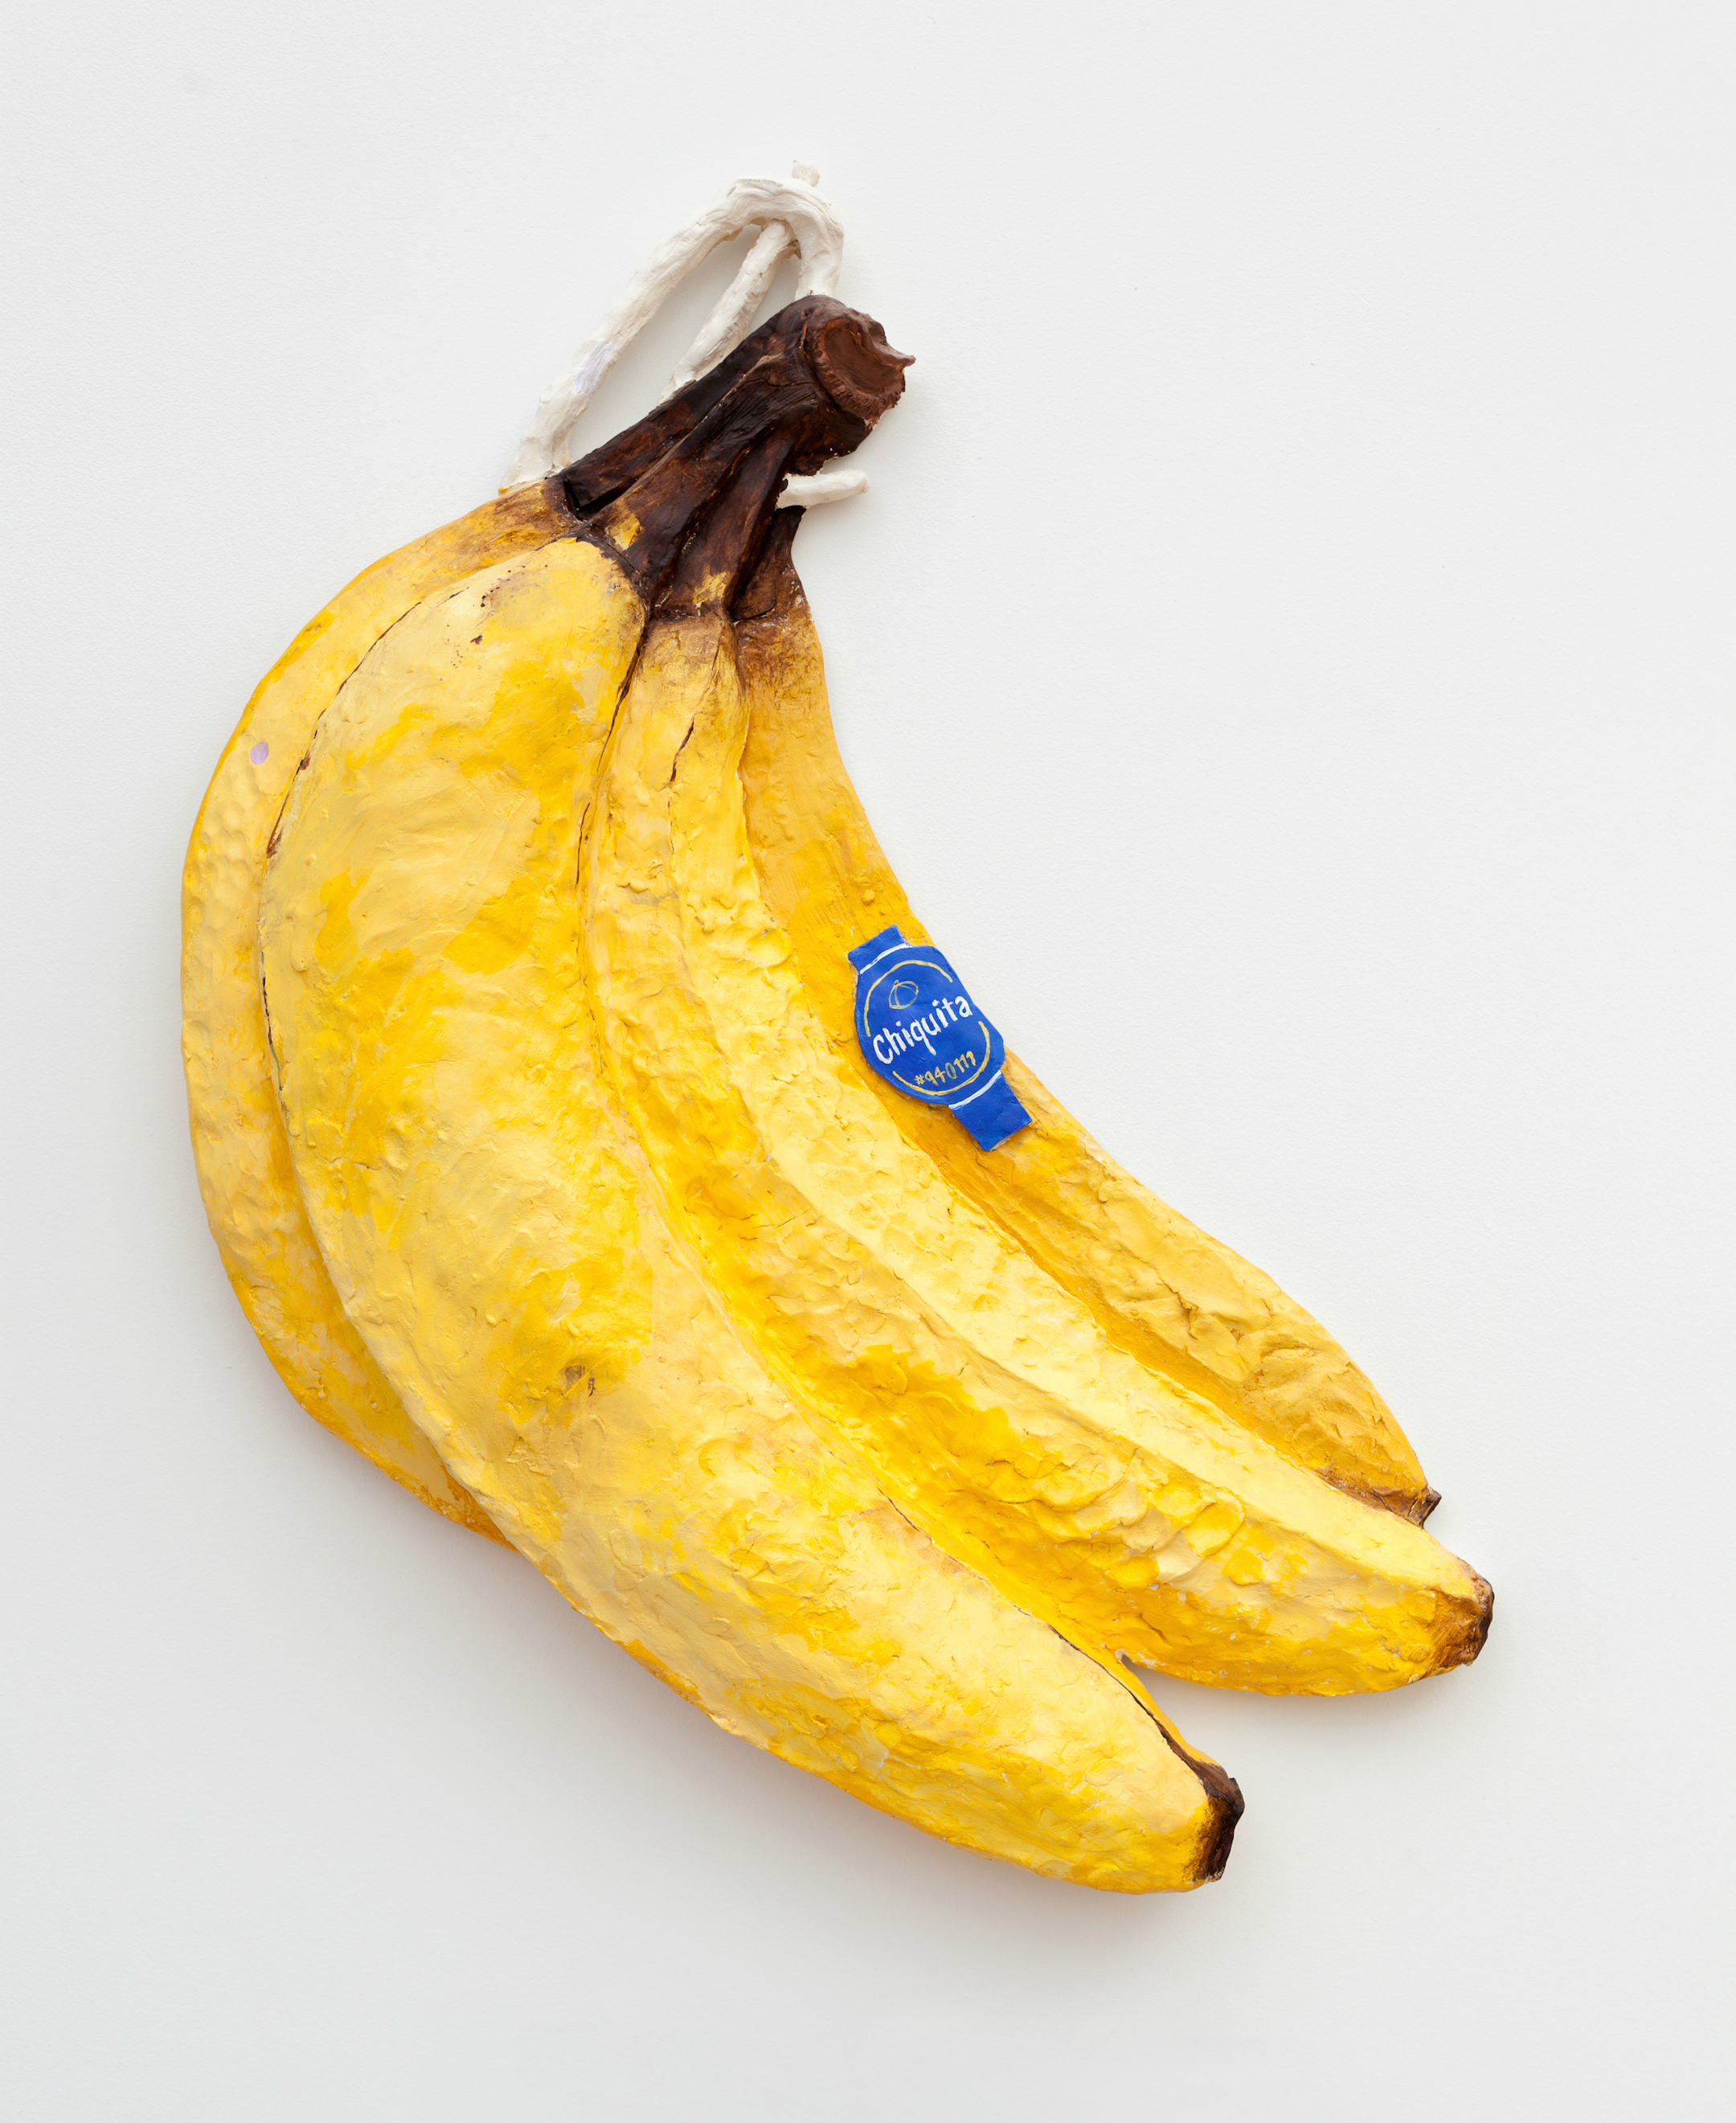   Darling, Take a Banana...Take TWO Bananas! (for Grandma Belle)   25” x 22” x 4” / Ceramic, acrylic / 2015 